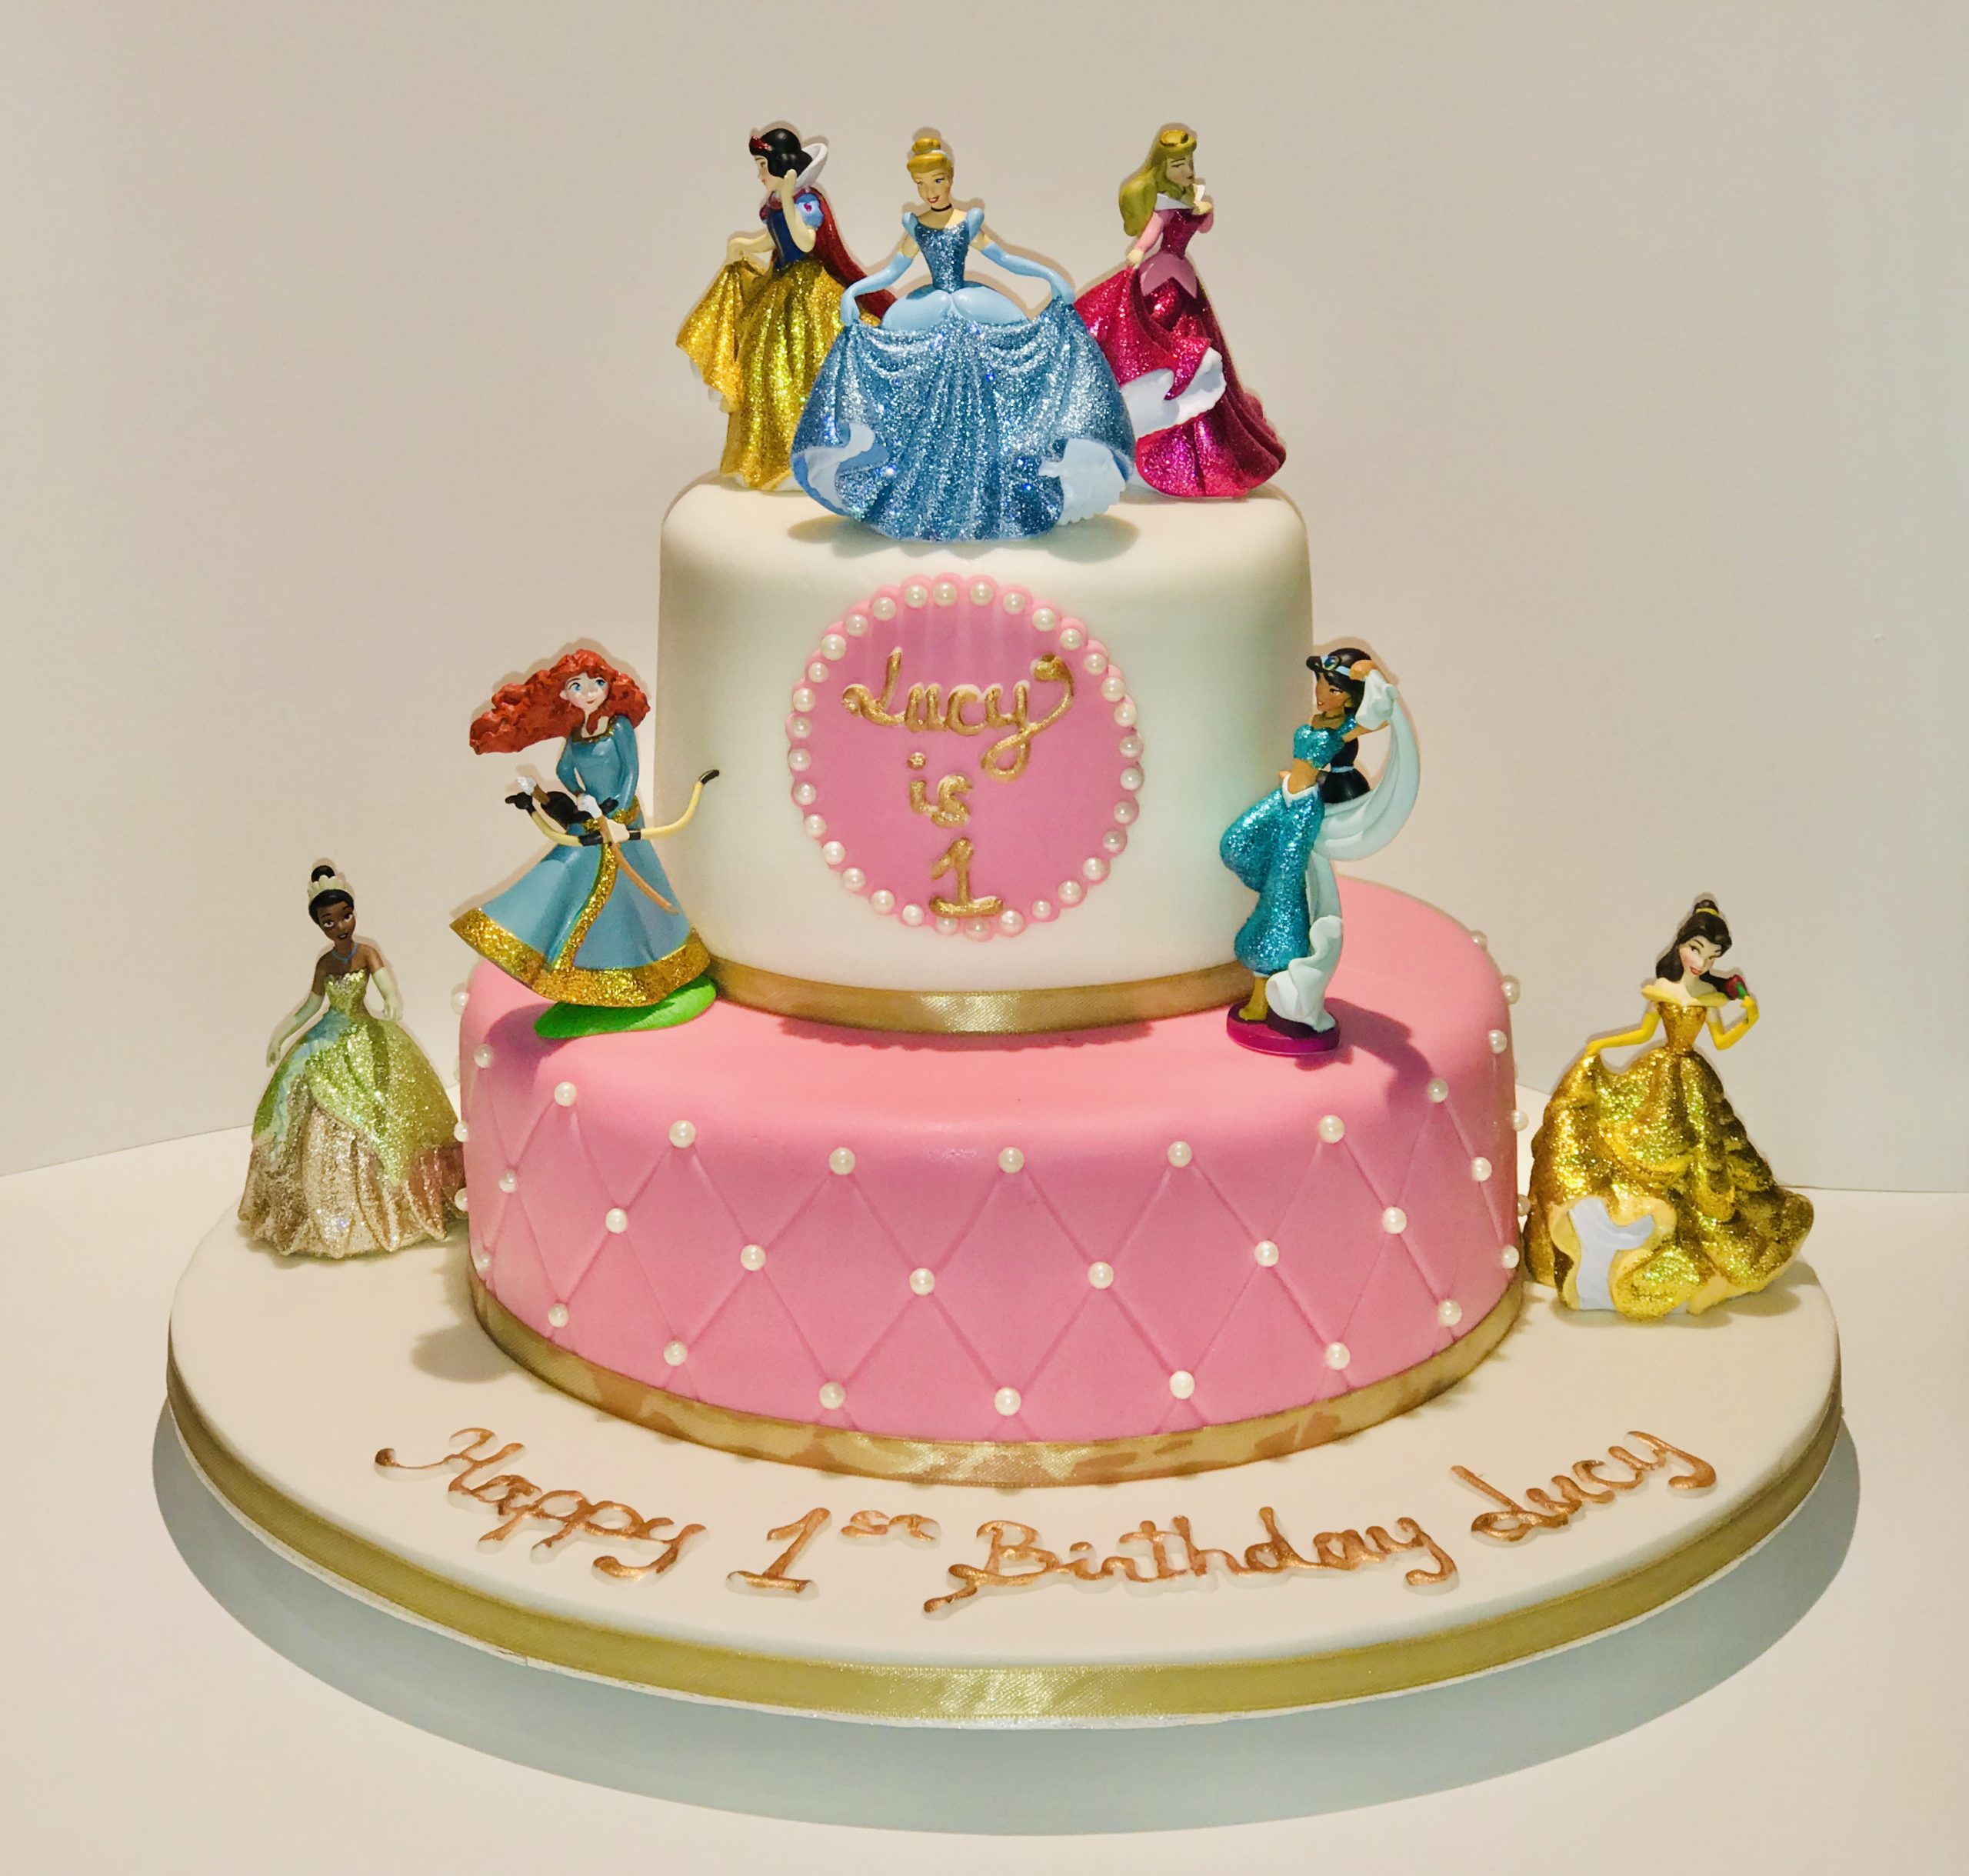 Disney Princess Cake - Order Online for a Magical Treat